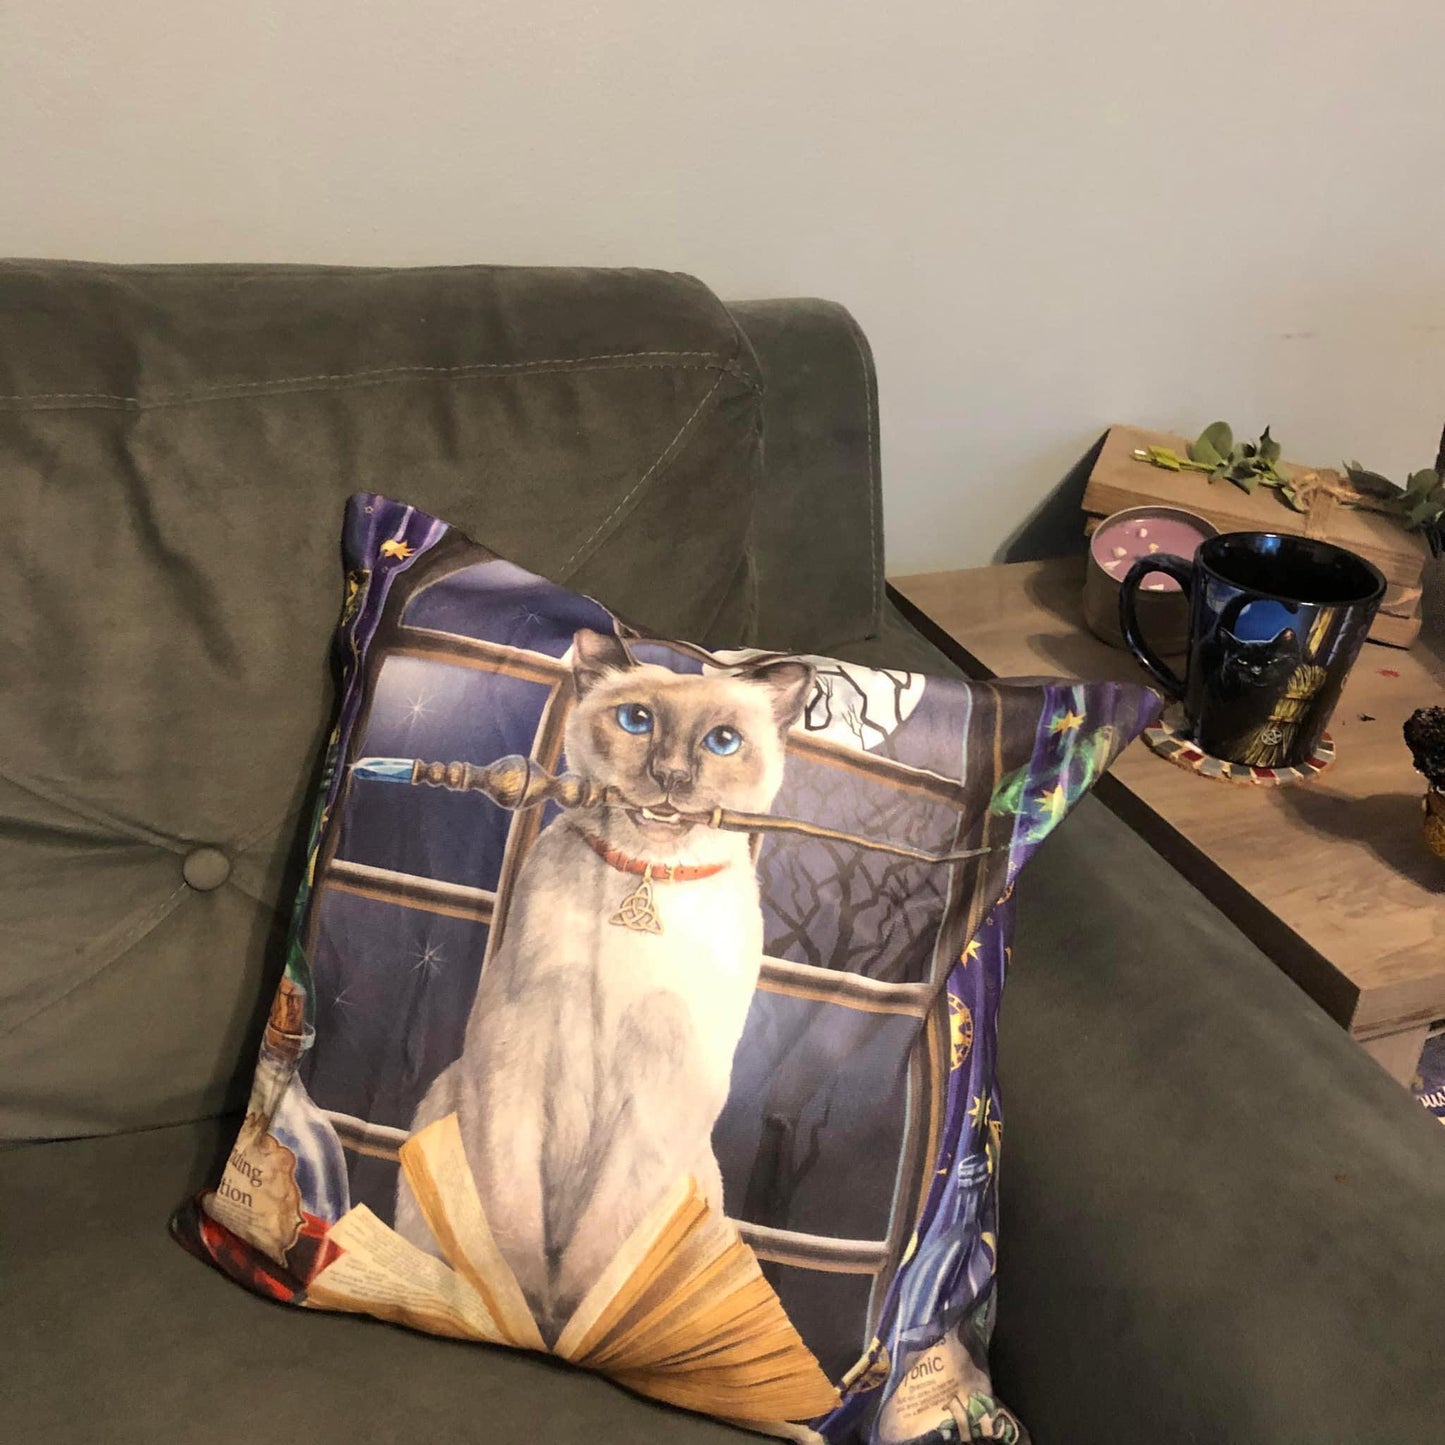 Lisa Parker Hocus Pocus Cat Cushion